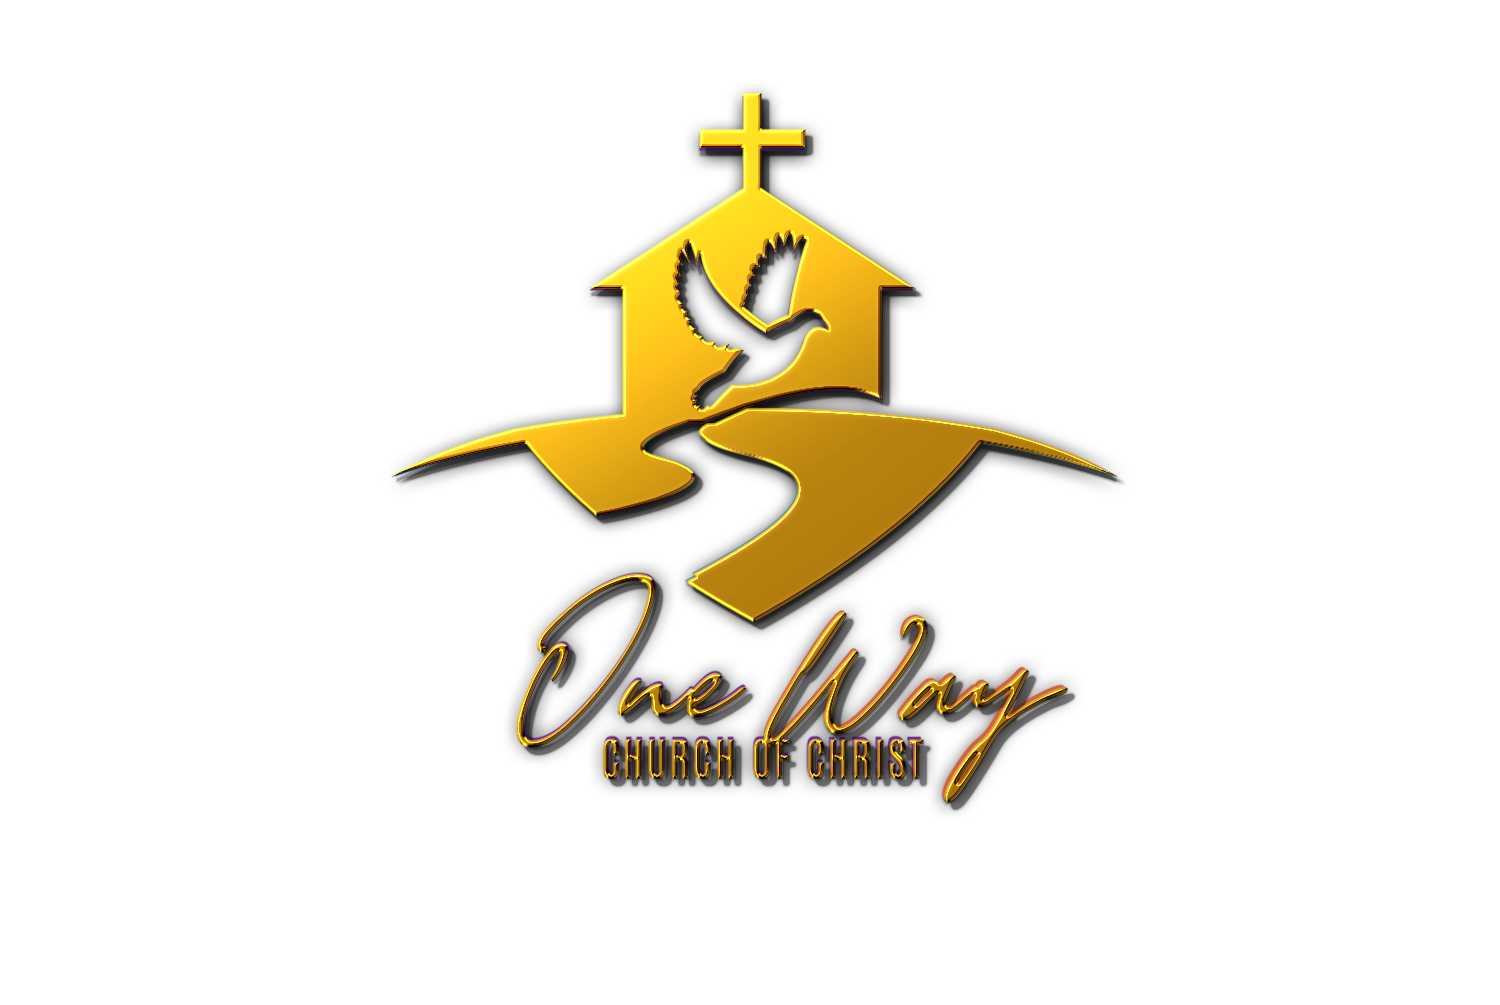 One Way Church of Christ